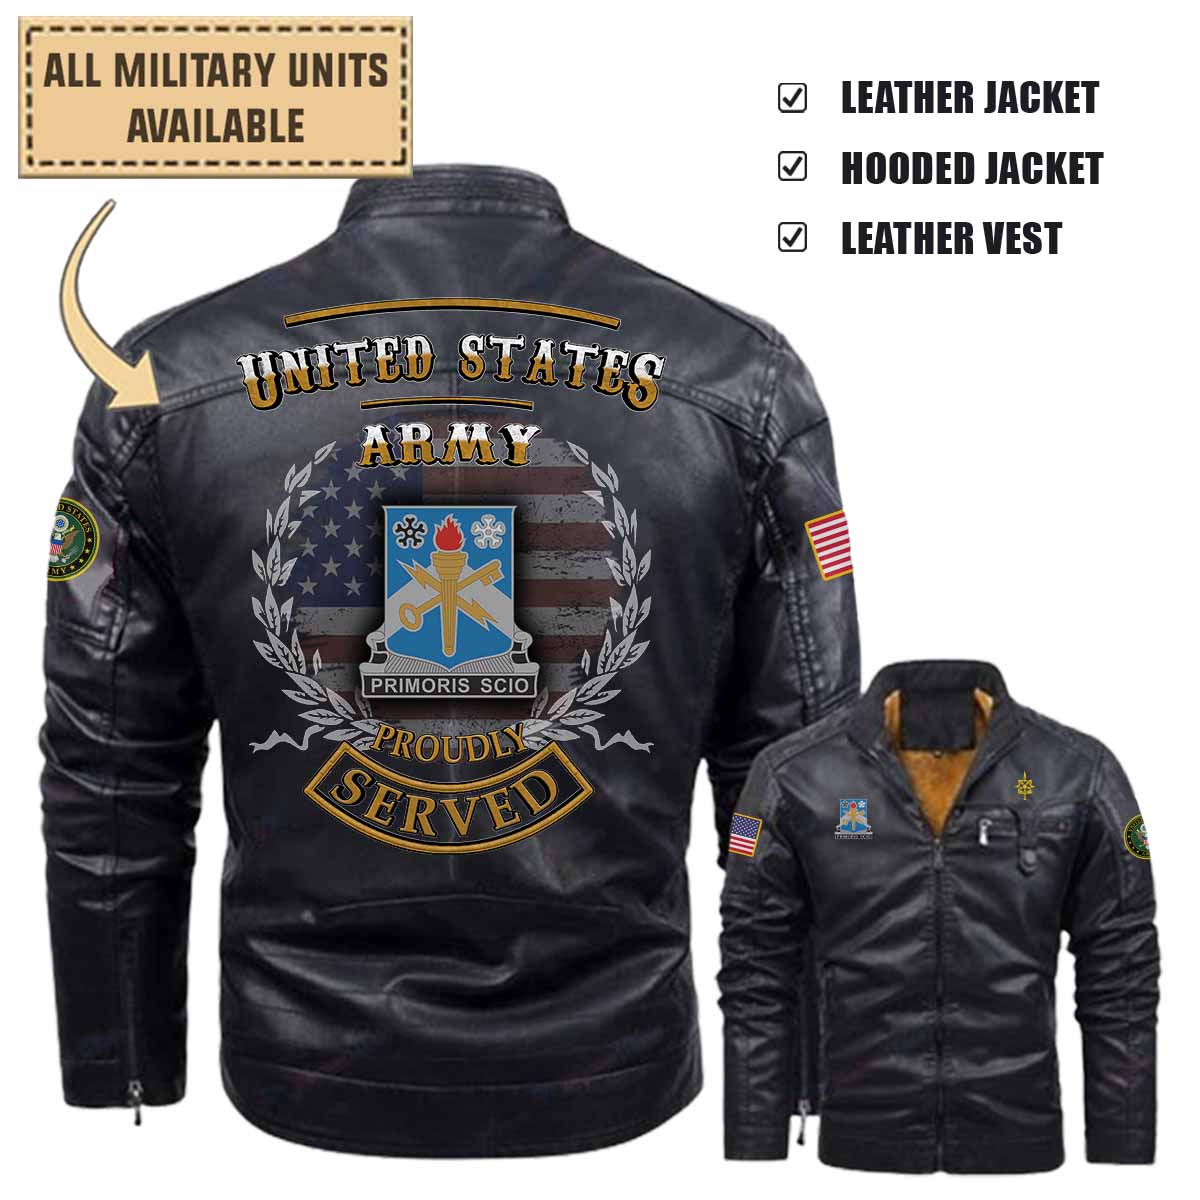 741st mi bn 741st military intelligence battalionleather jacket and vest 1u487